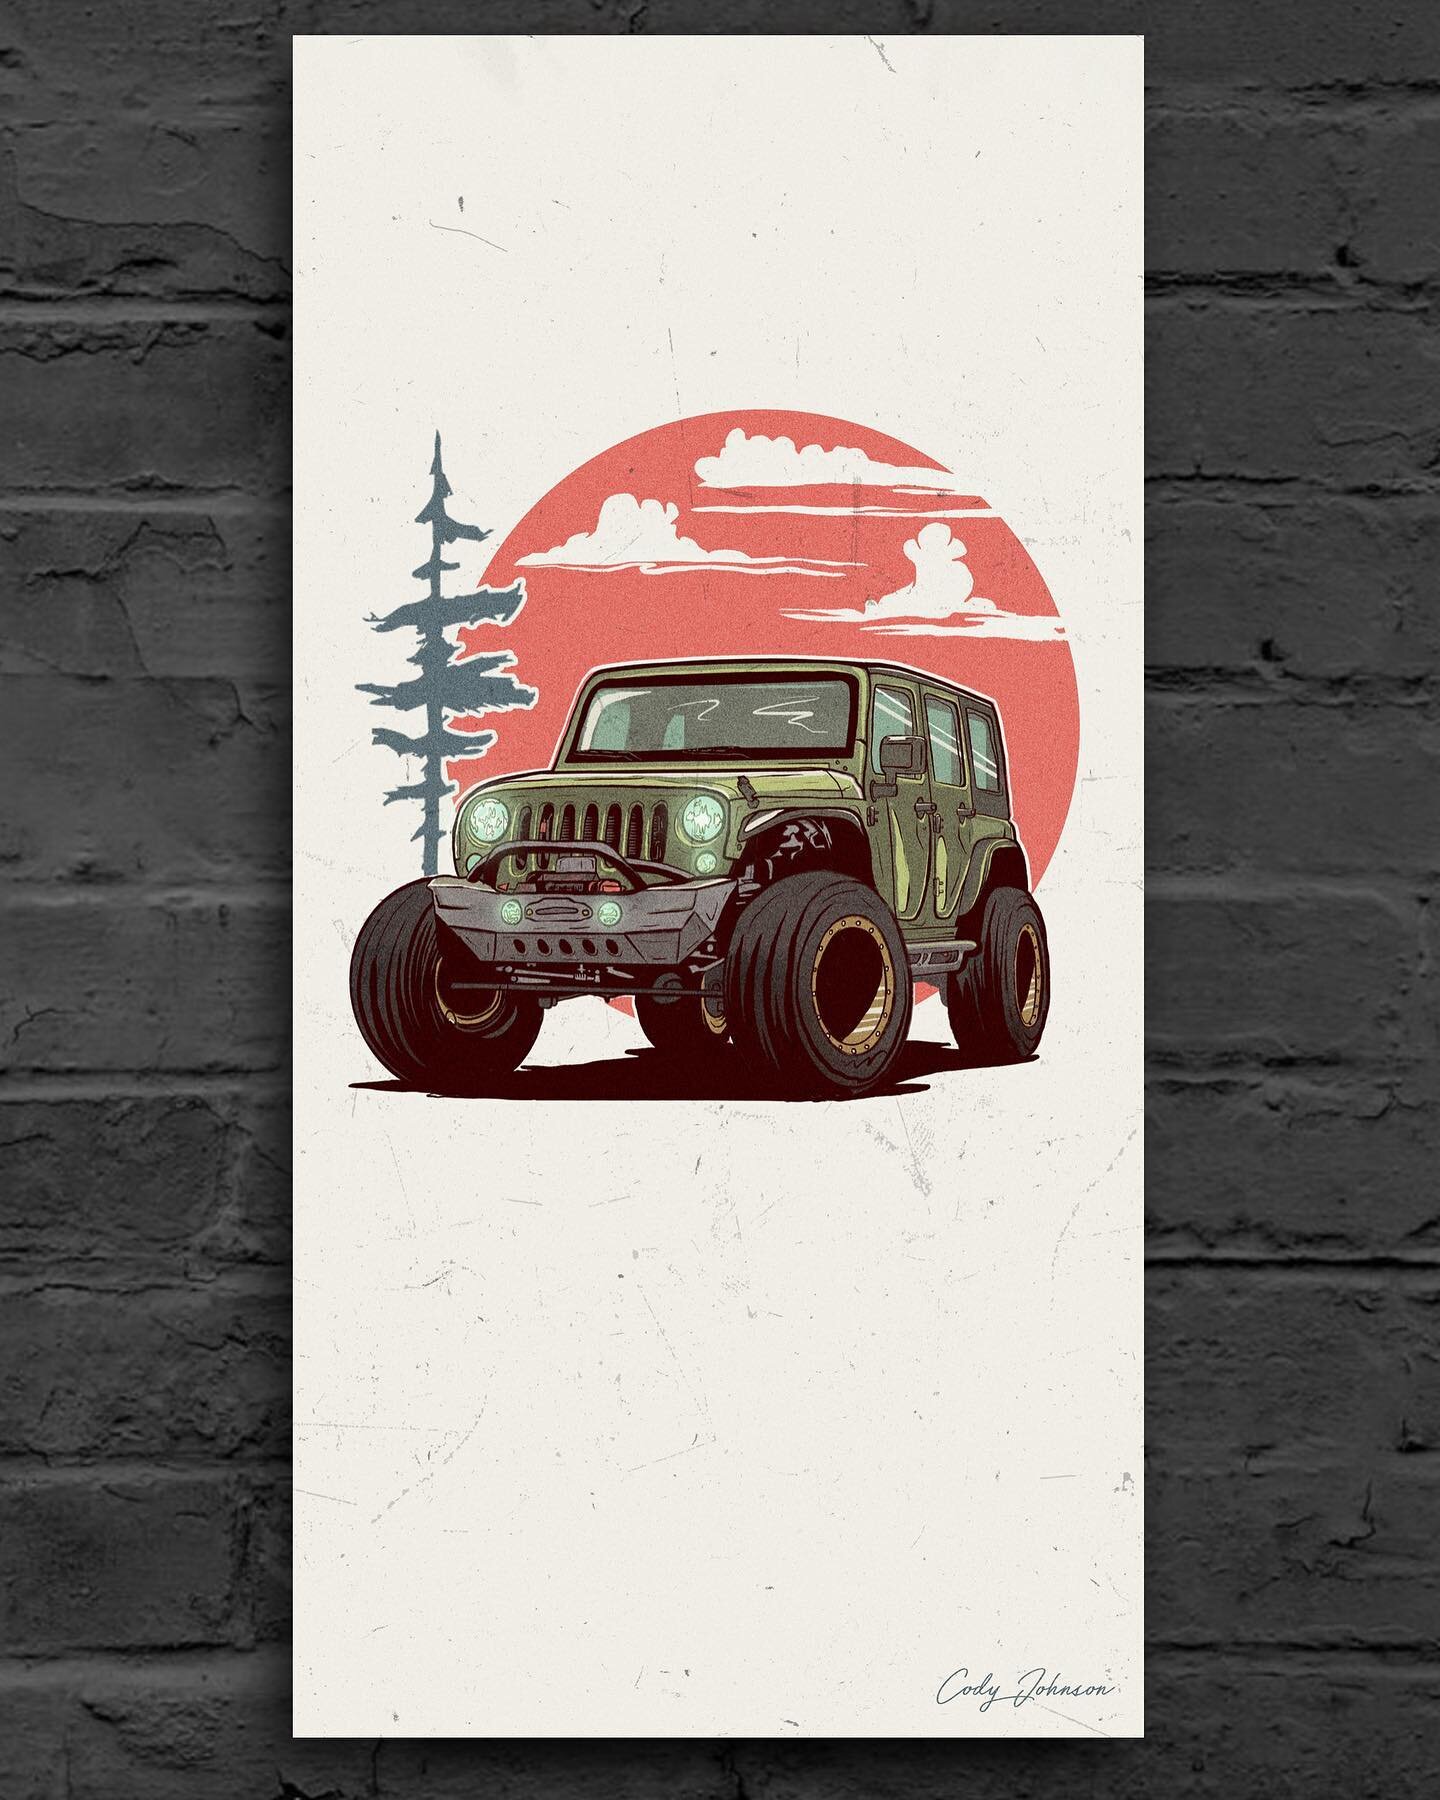 Cool Jeep illustration, swipe to see more views and colorways!
.
.
.
#jeep #jeepwrangler #illustration #art #myart #digitalart #digitalillustration #illustratorlife #contemporaryart #artoftheday #picoftheday #instagood #instamood #lovelandcolorado #c